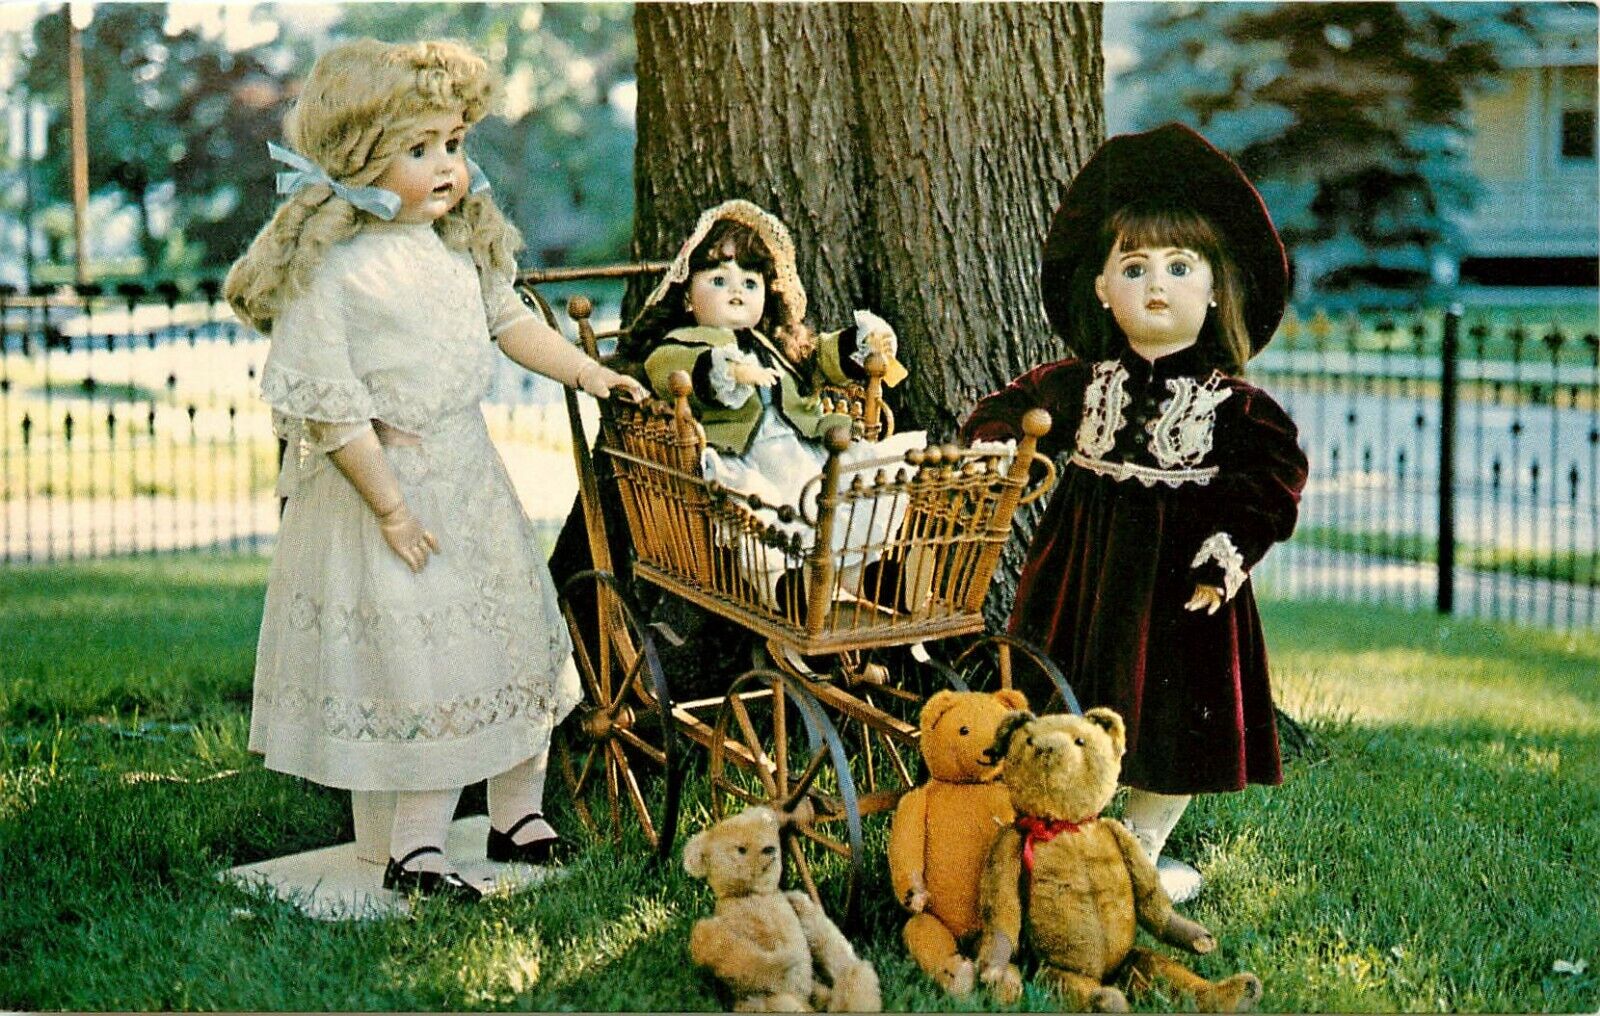 Raggedy Ann Antique Doll & Toy Museum Flemington New Jersey NJ Postcard